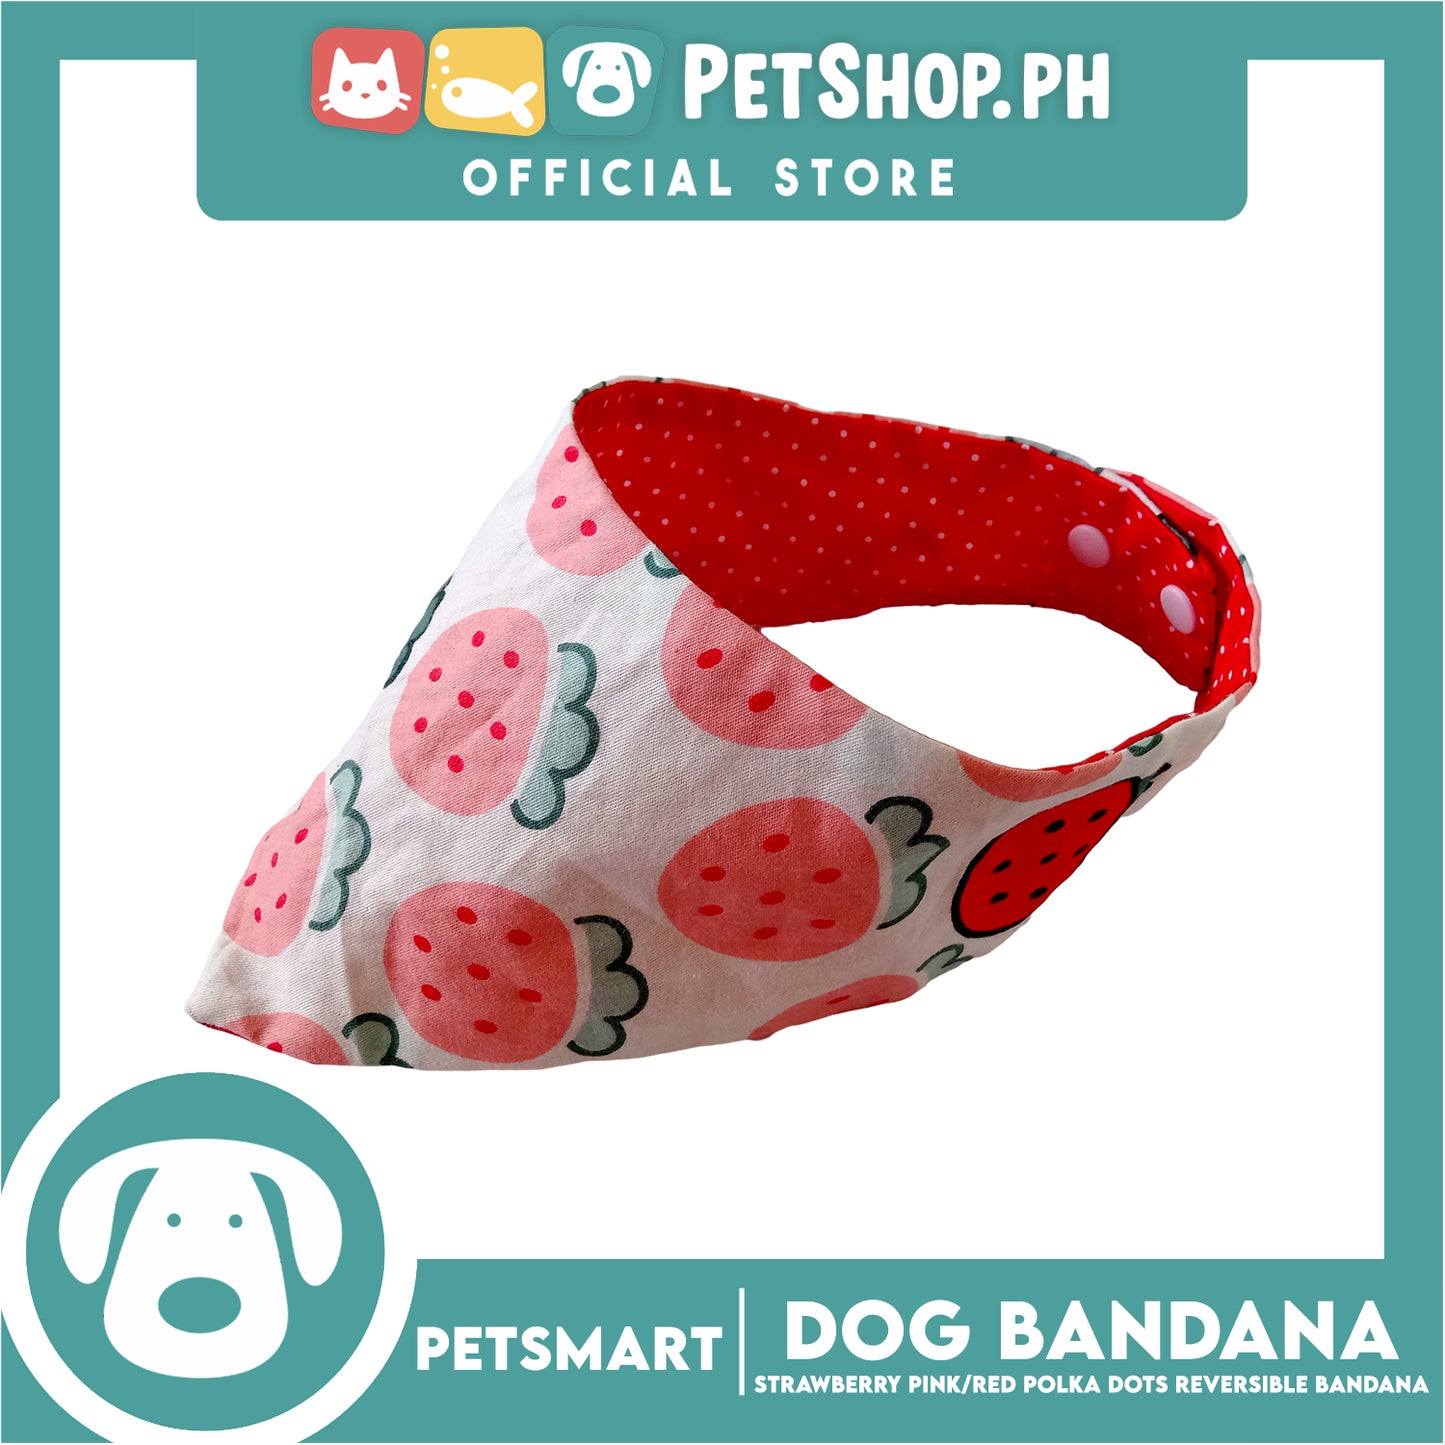 Dog Bandana, Strawberry Design, Pink with Red Polka Dots Reversible Bandana DB-CTN41M (Medium) Soft and Comfortable Pet Bandana